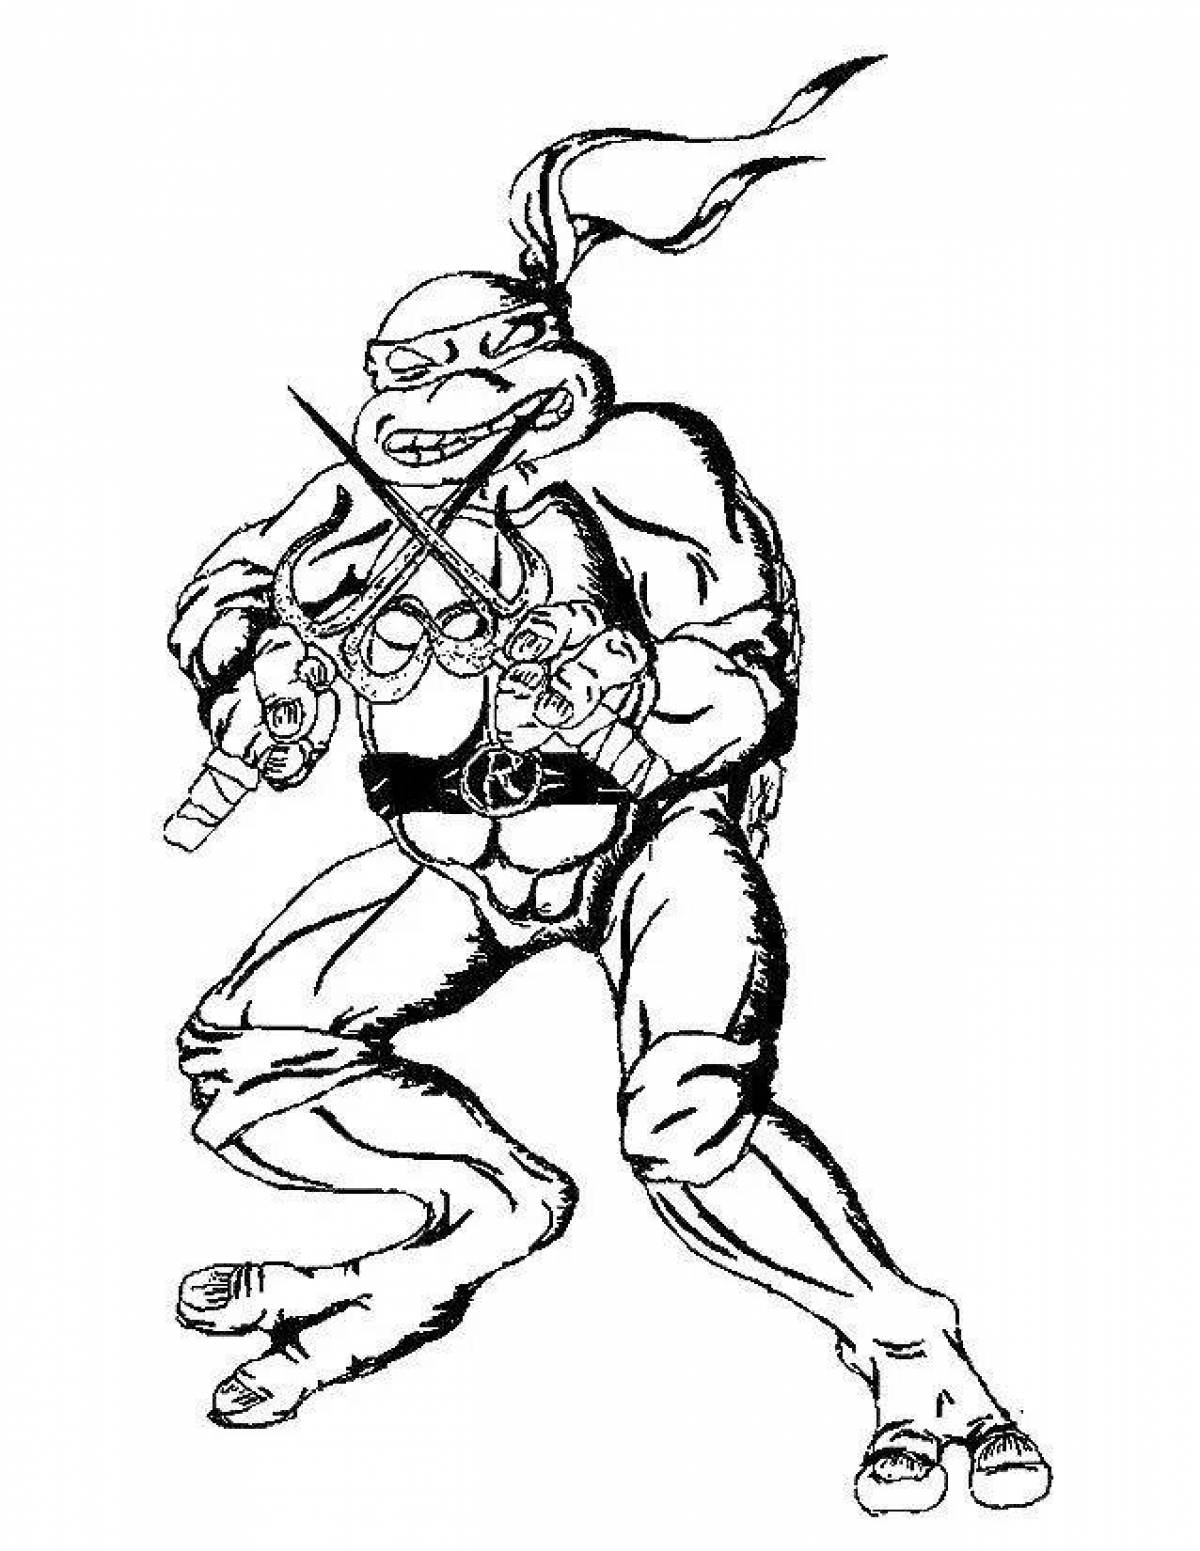 Glorious Teenage Mutant Ninja Turtles coloring page